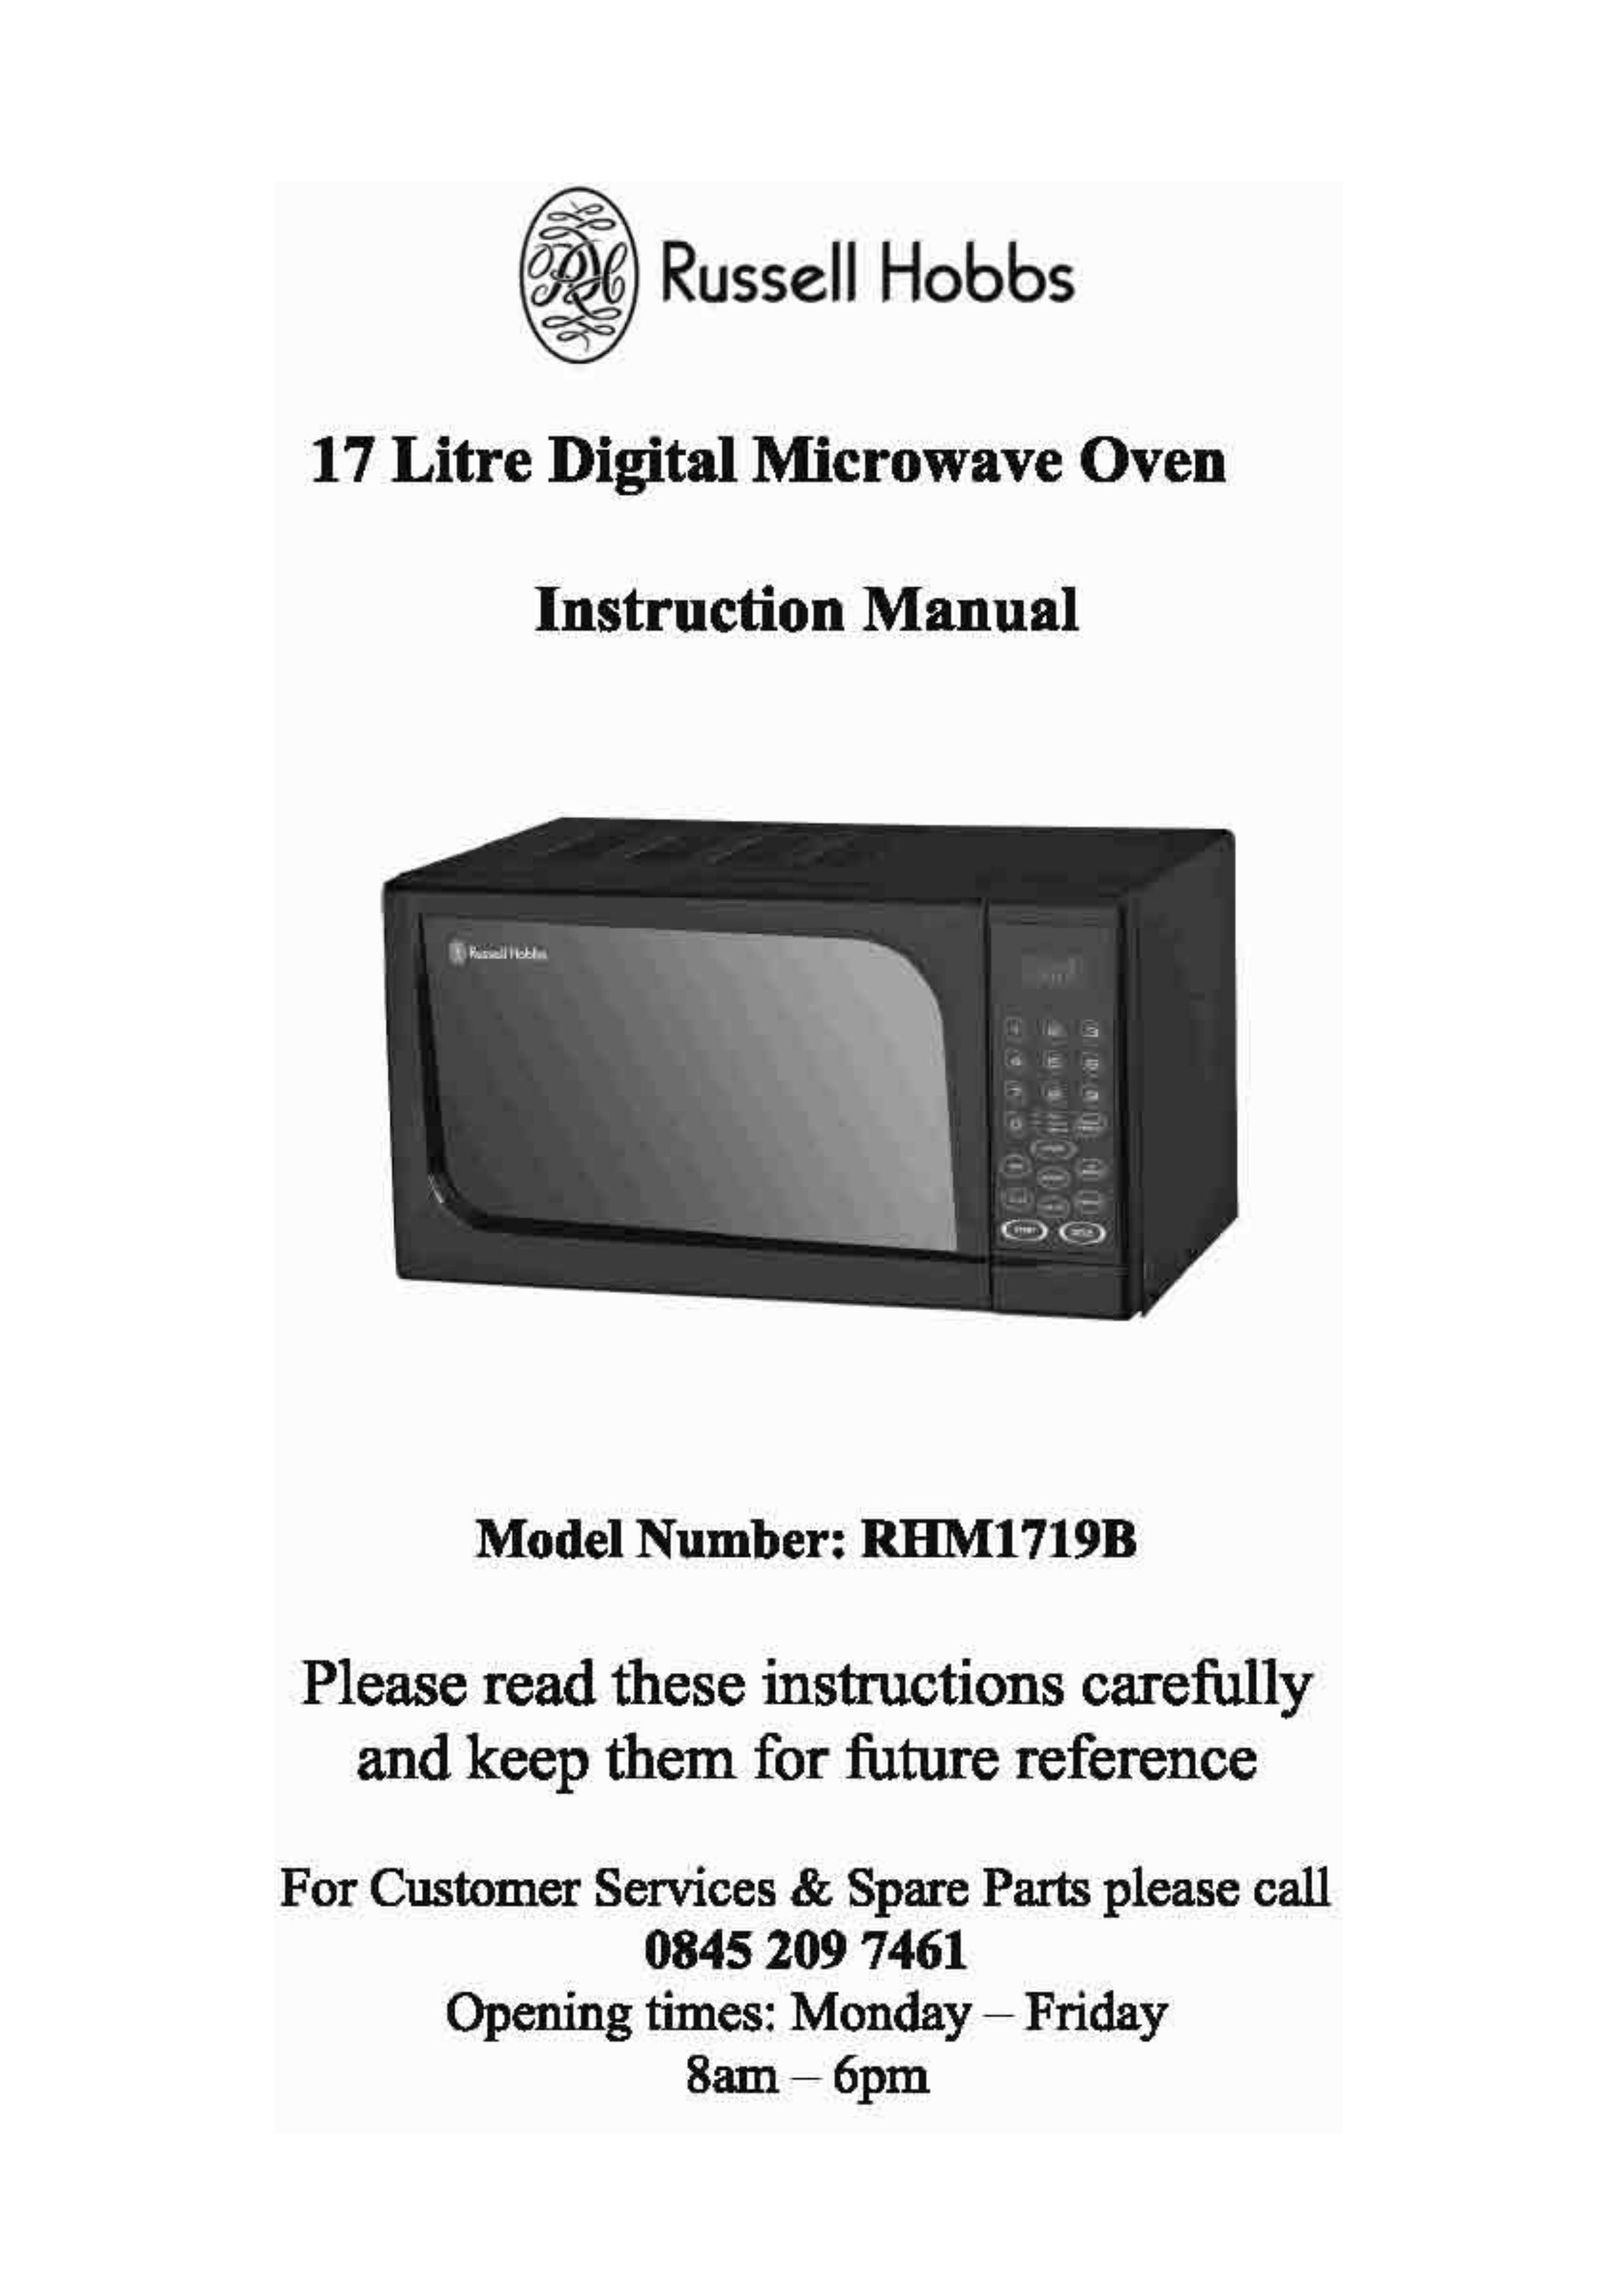 Russell Hobbs RHM1719B Microwave Oven User Manual